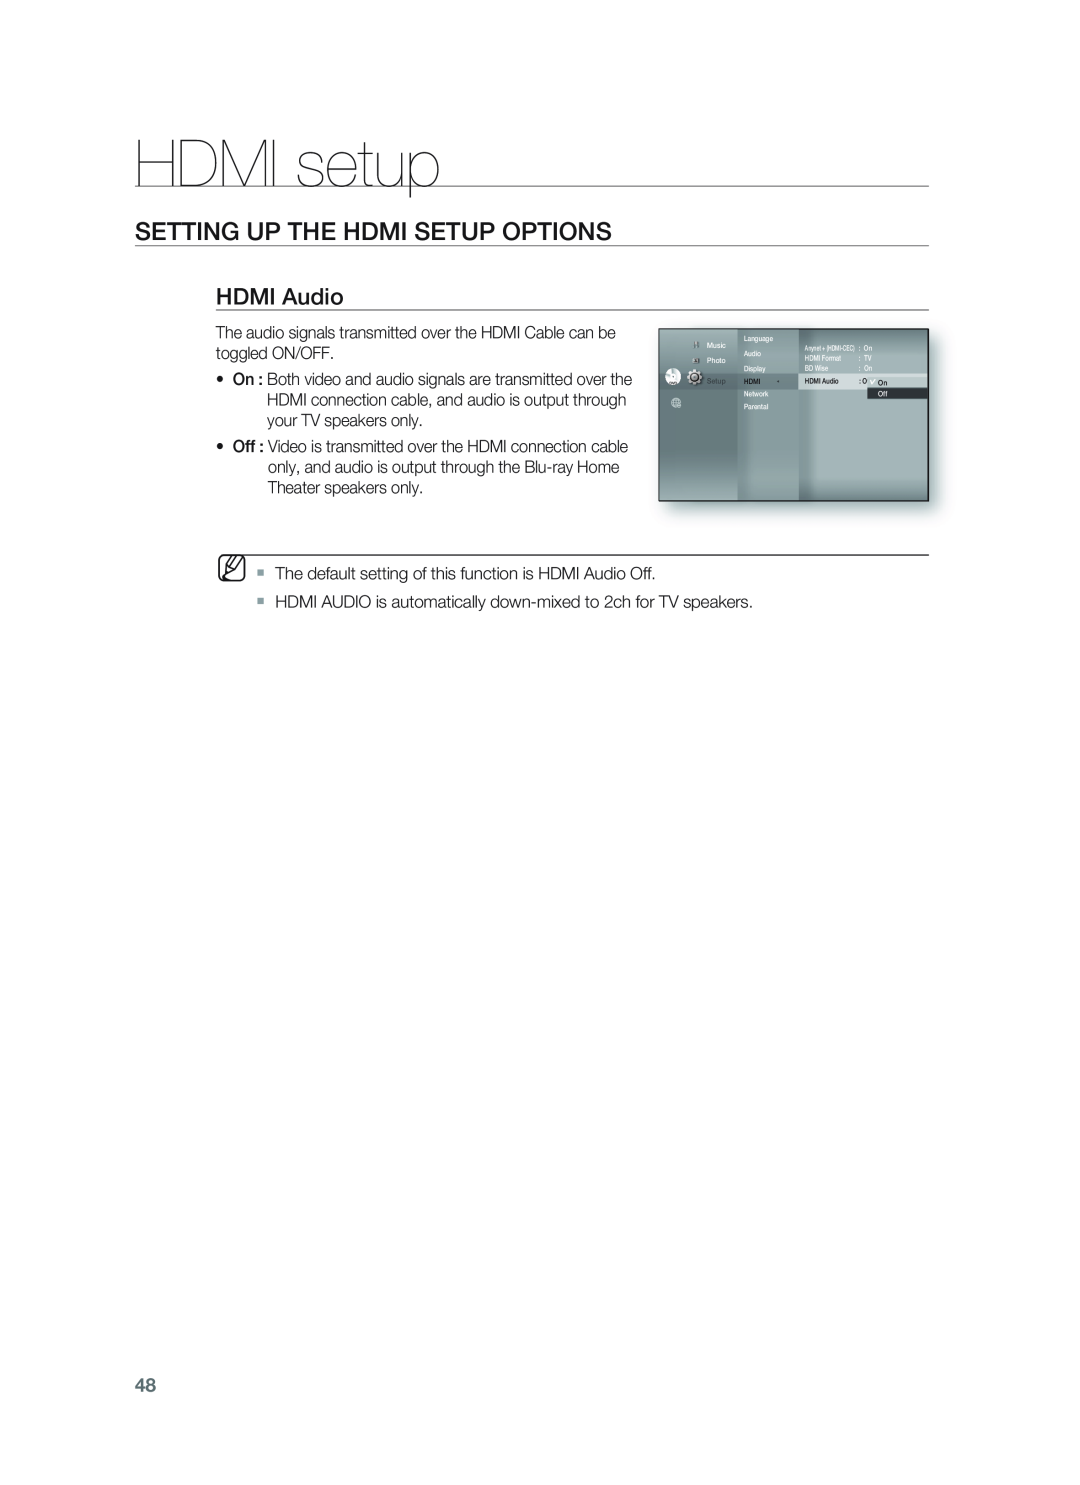 Samsung HT-BD1255, HT-BD1252 user manual HDMI Audio, HDMI setup, Setting Up The Hdmi Setup Options 